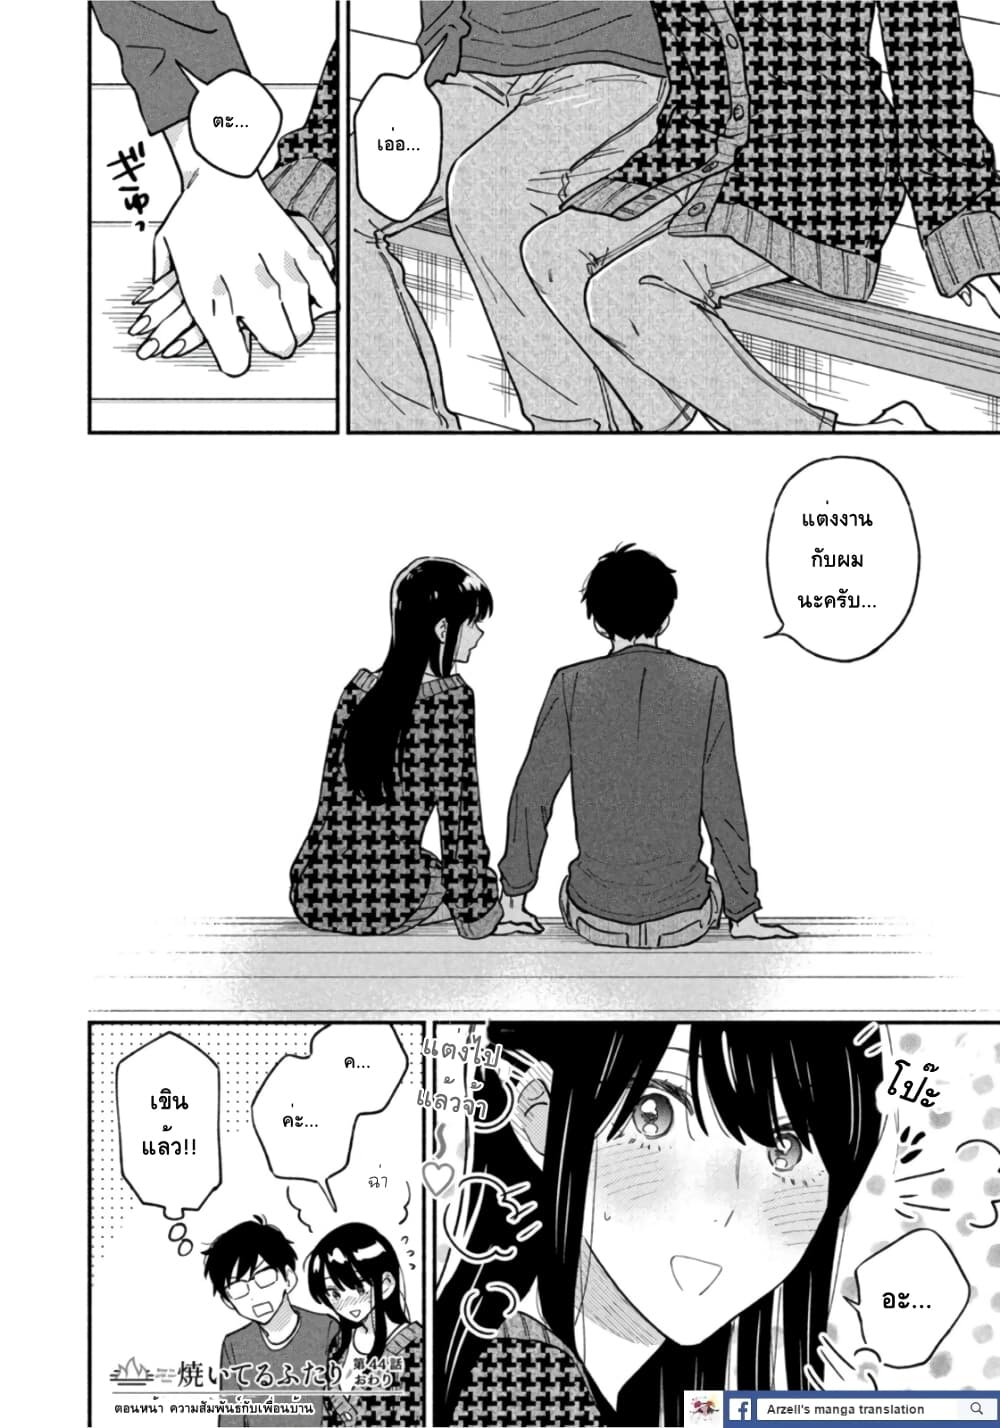 Время любовь манга. How to Grill our Love Manga. 44 Days Manga.